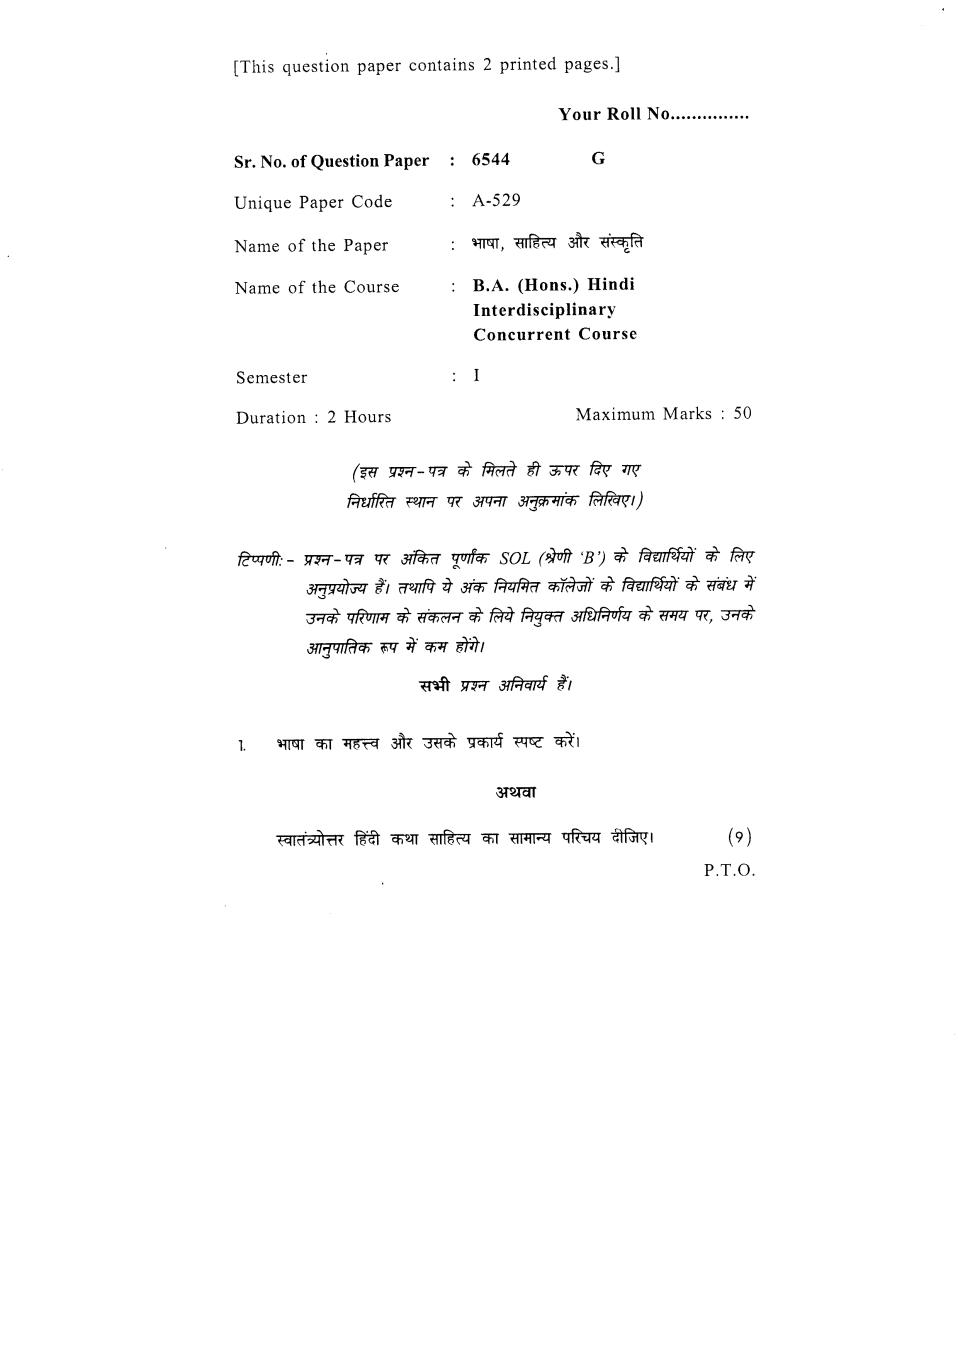 DU SOL Question Paper 2018 BA (Hons.) Hindi - Language, Literature and Culture - Page 1